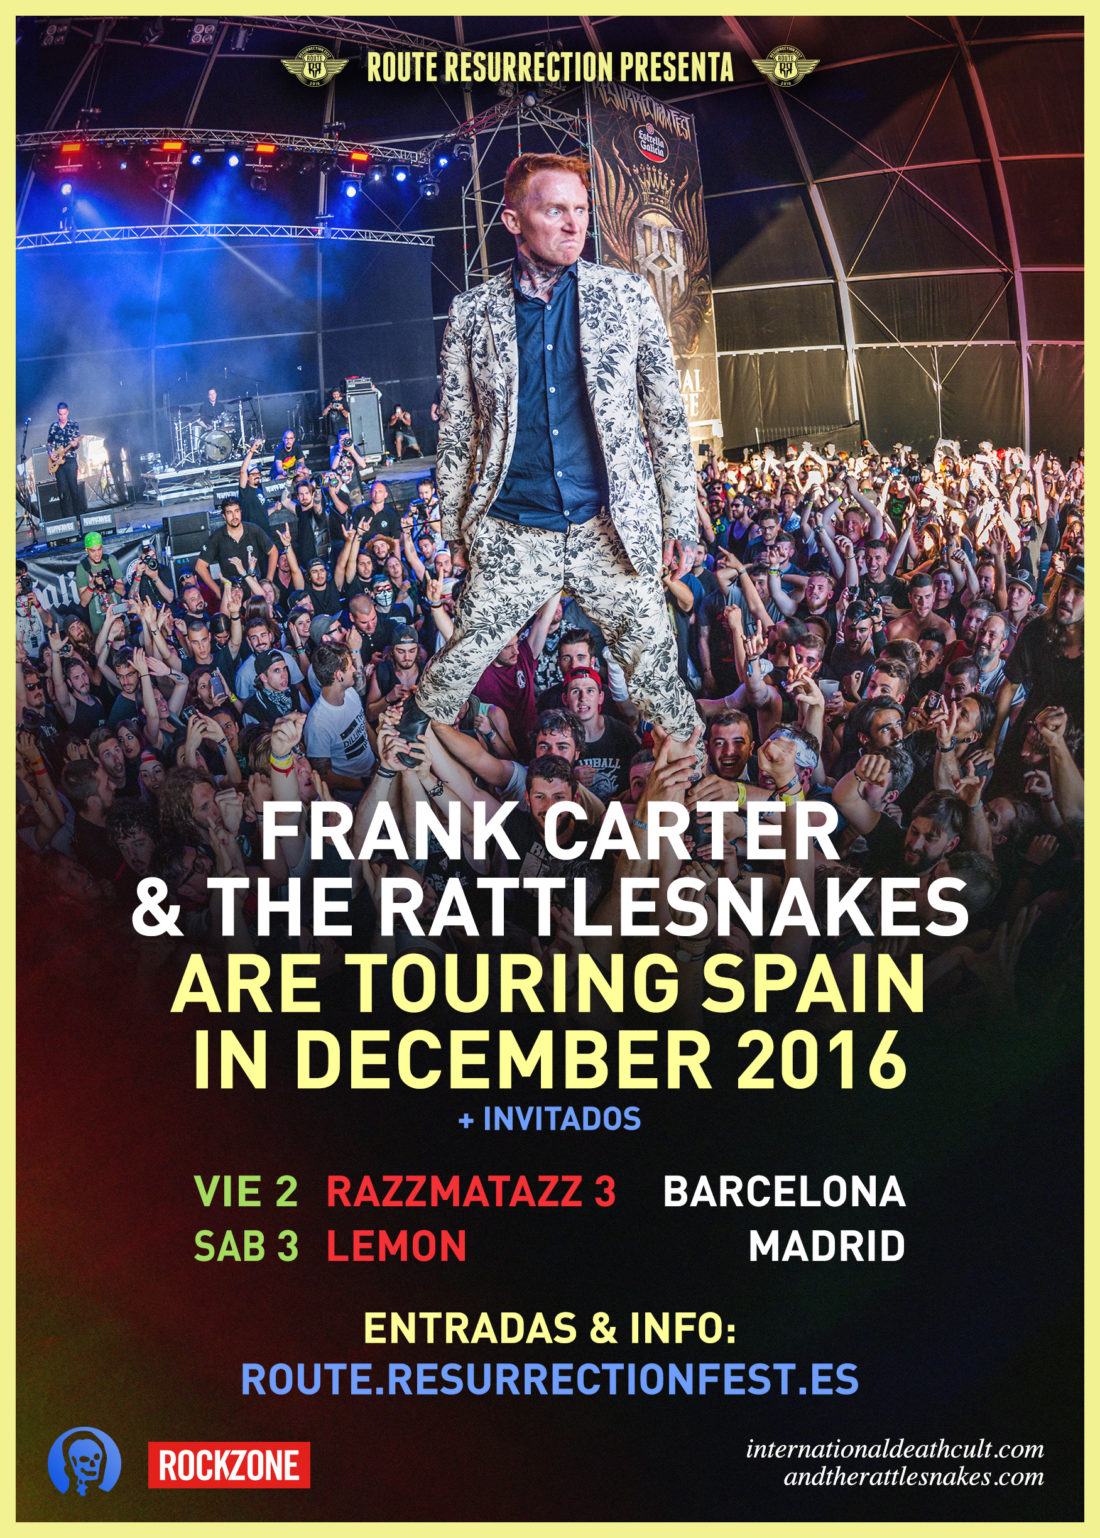 Nuevo Route Resurrection: Frank Carter & The Rattlesnakes en Madrid y Barcelona